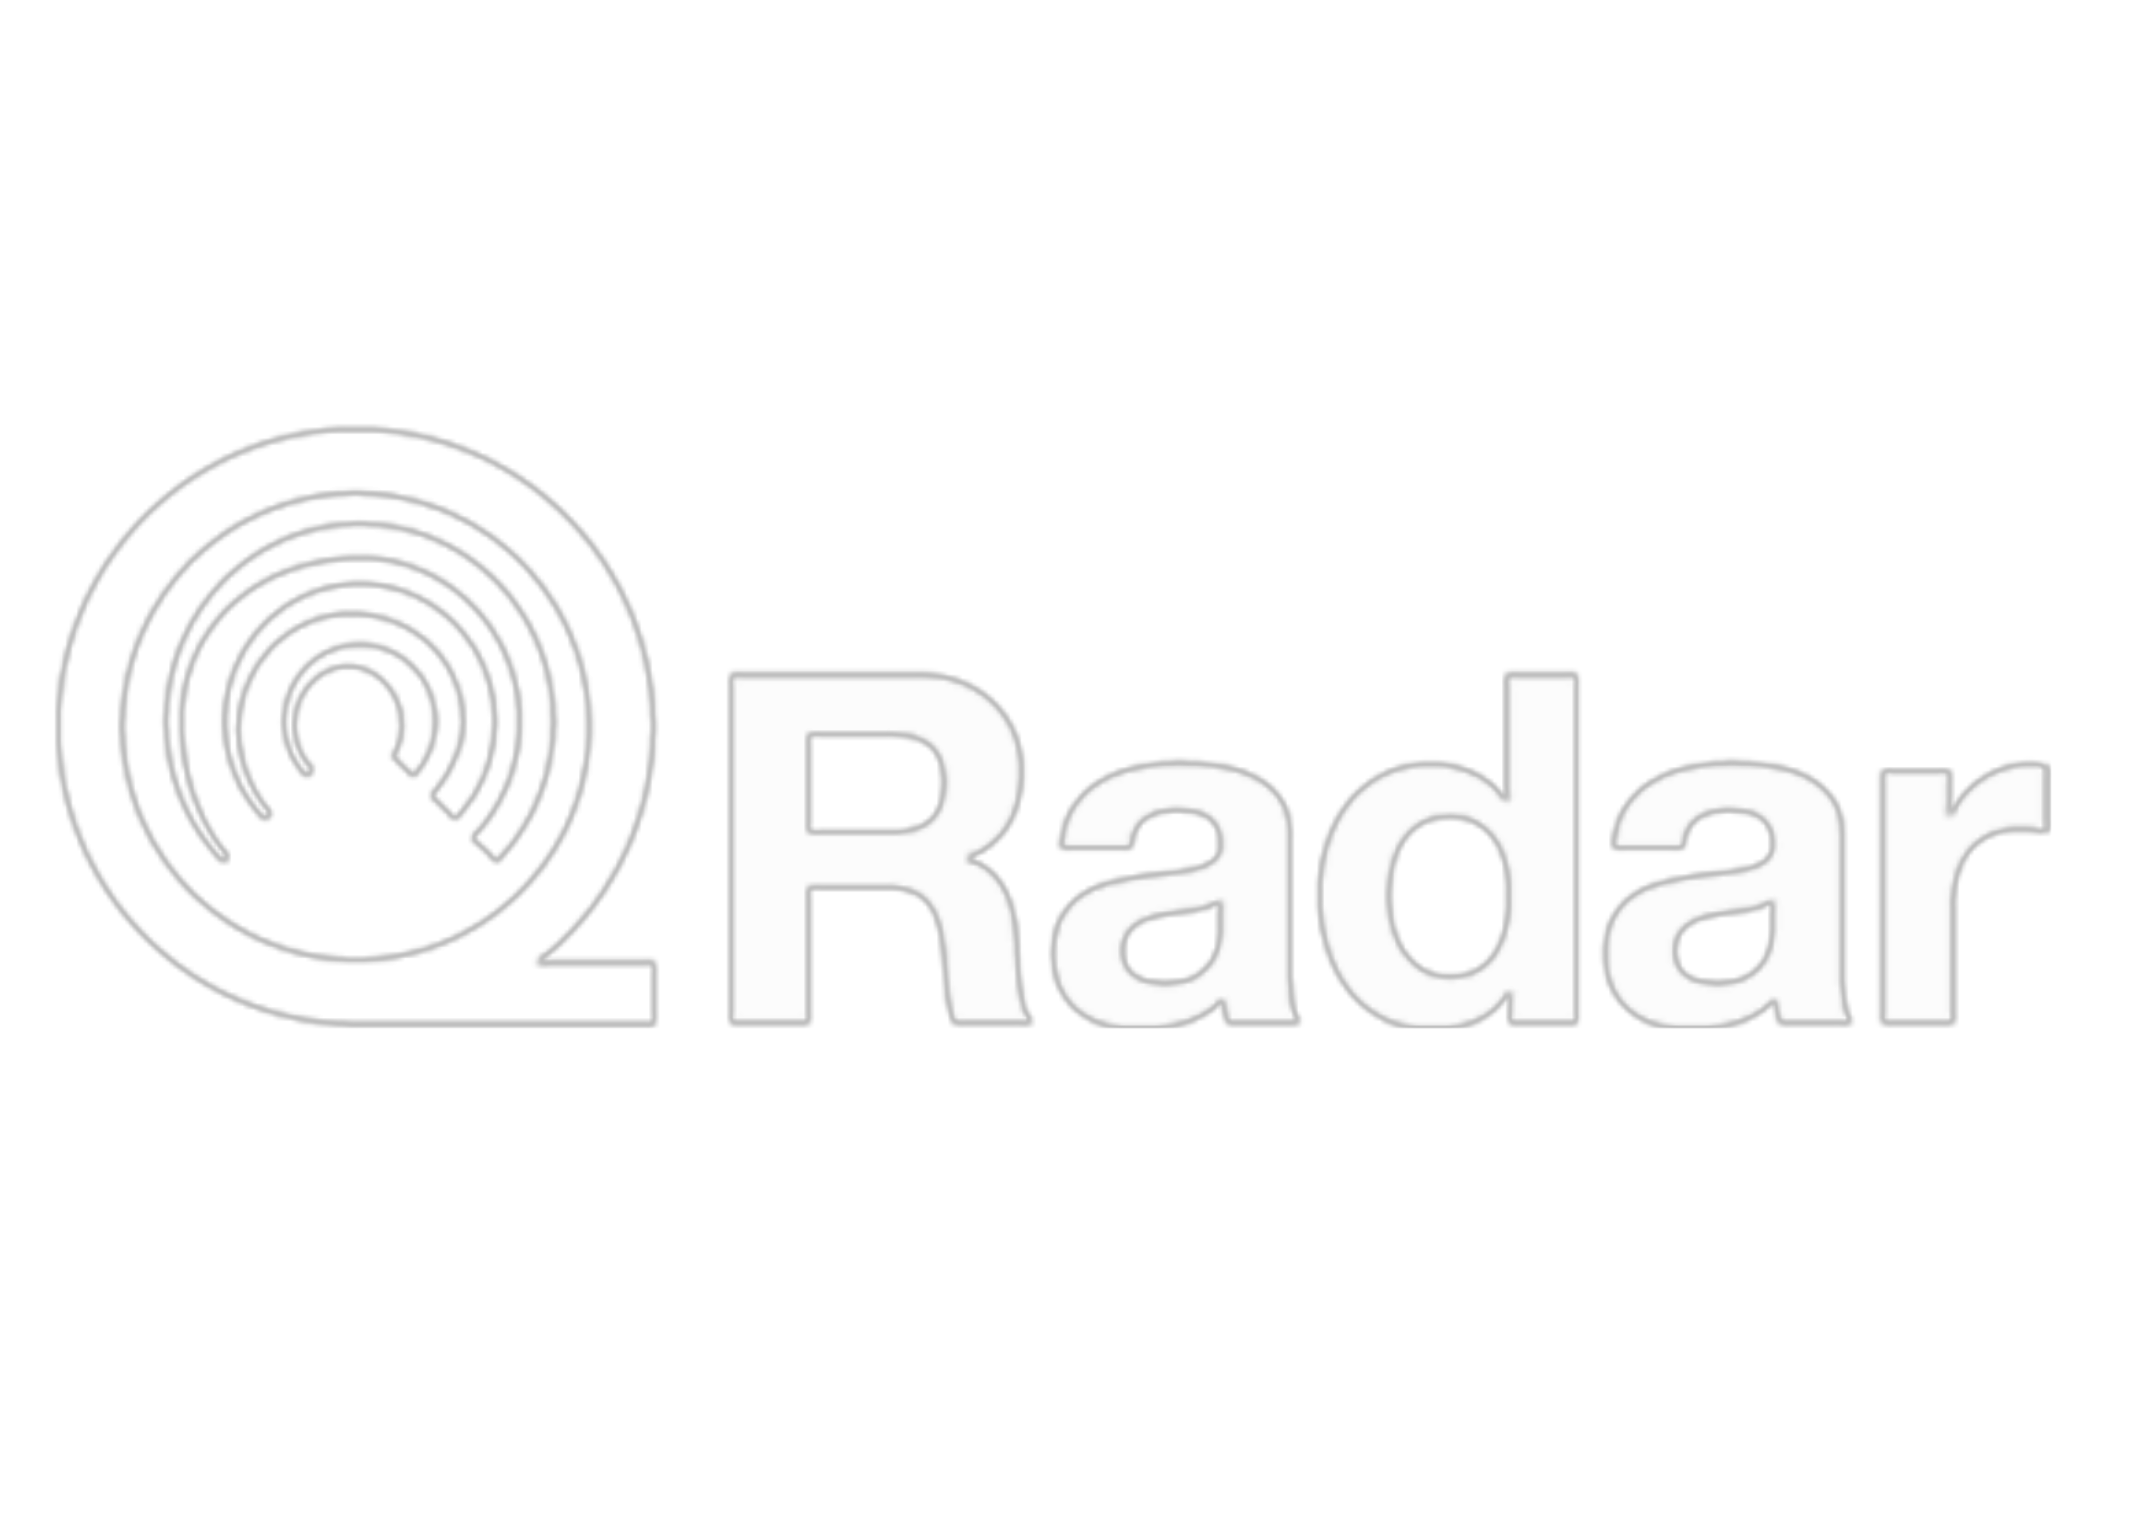 QRadar Logo